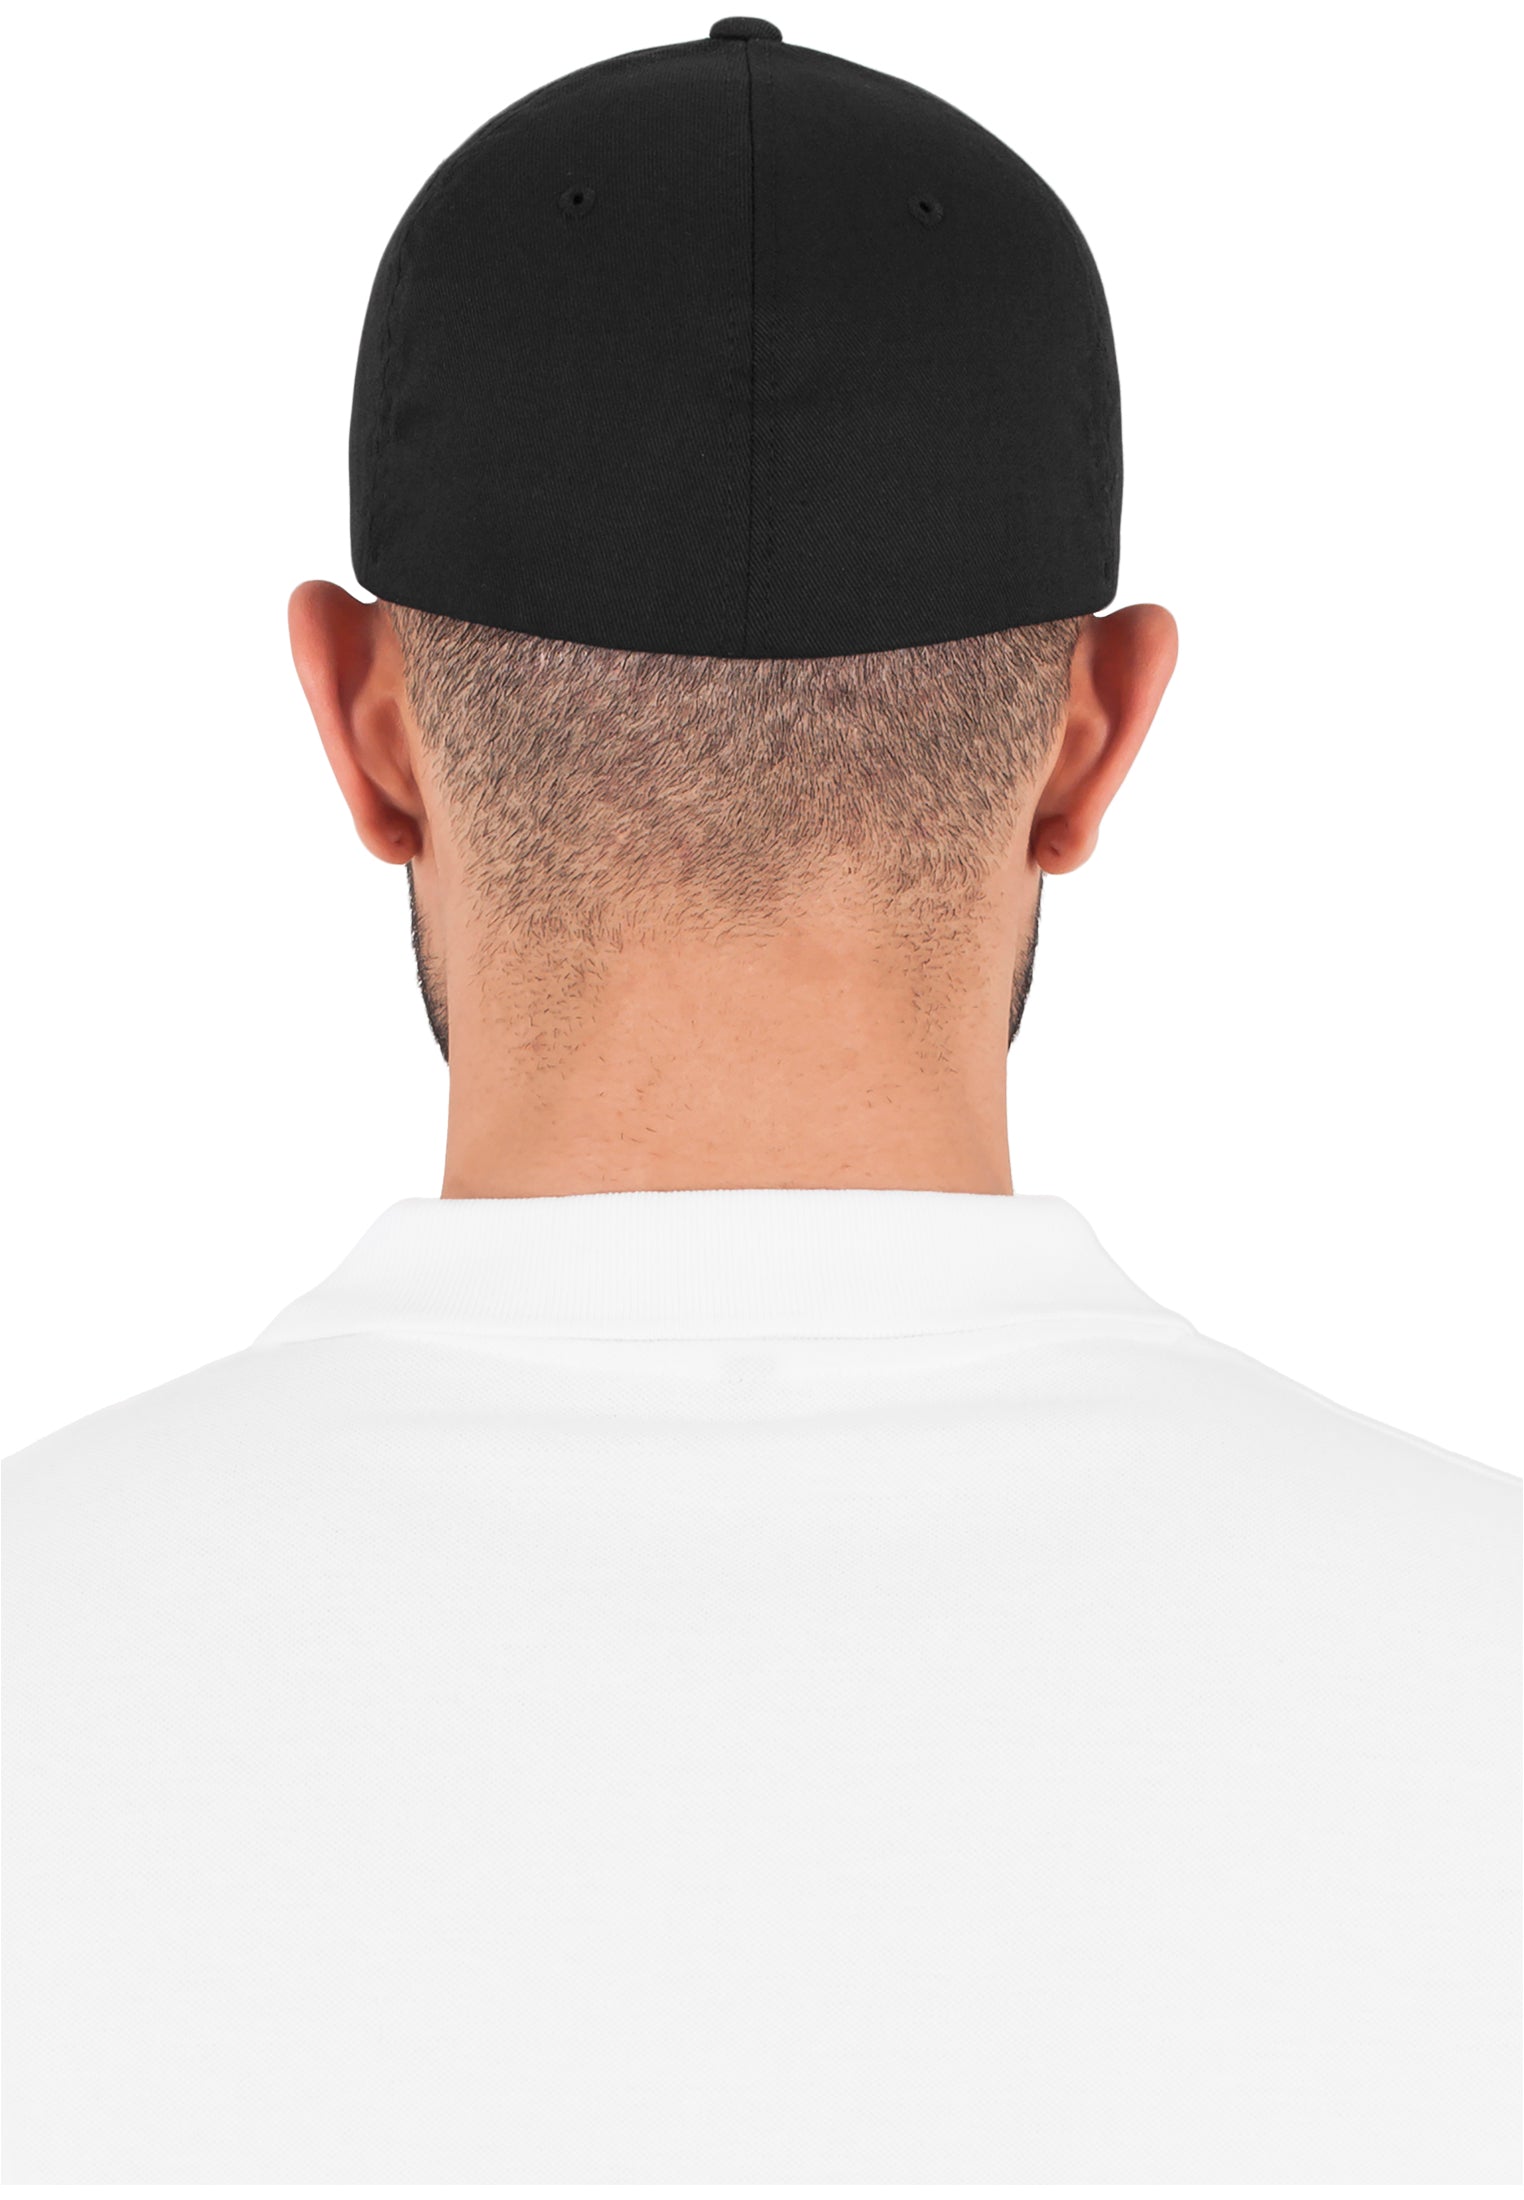 Flexfit Cap - Diamond Quilted Black - Headz Up 